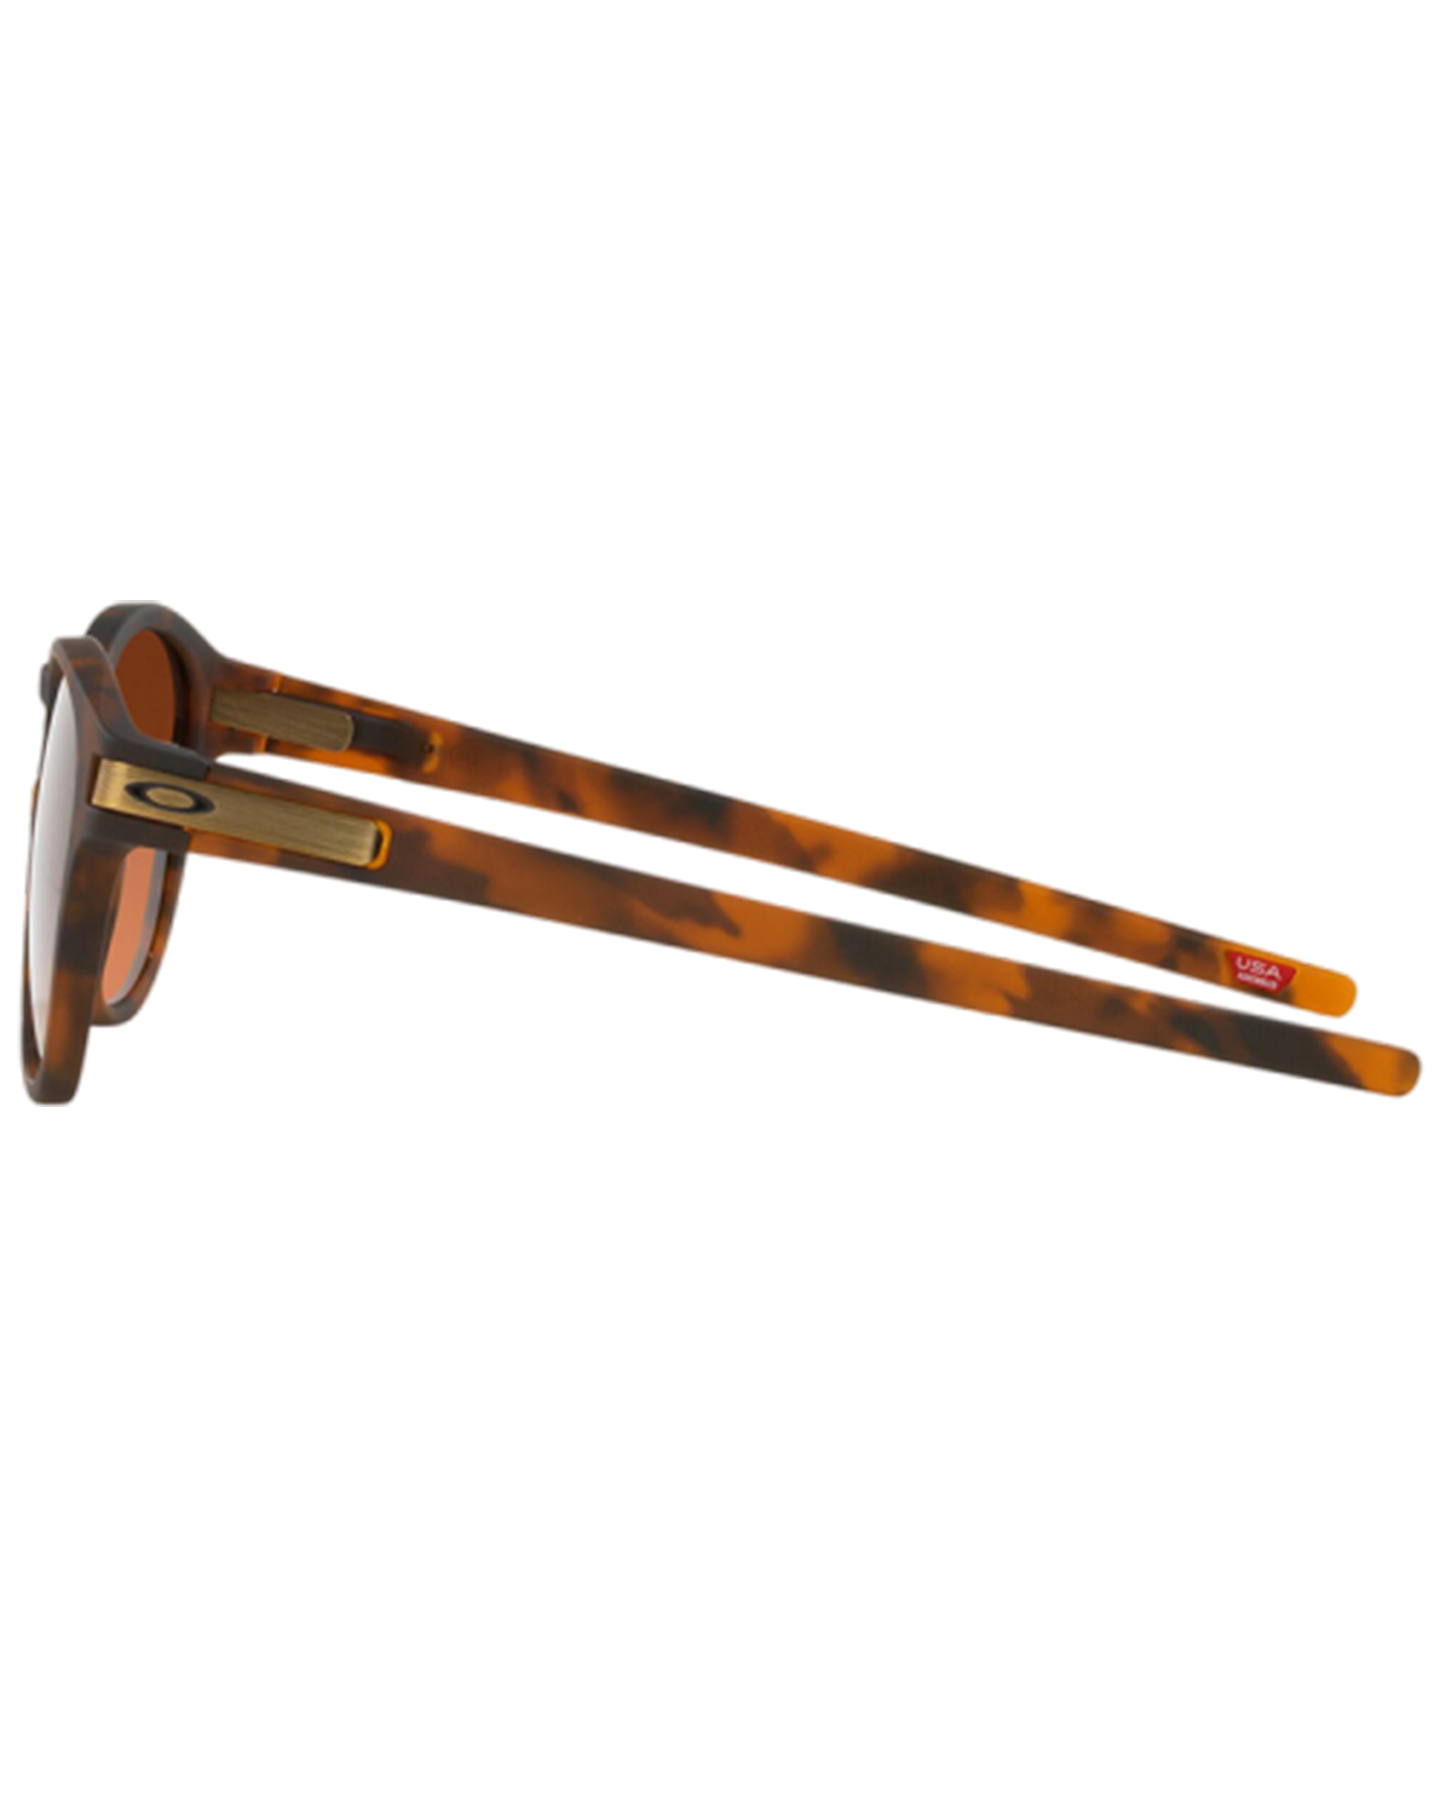 Oakley Latch Matte Brown Tortoise W/ Prizm Brown Gradient Lens Sunglasses - Trojan Wake Ski Snow